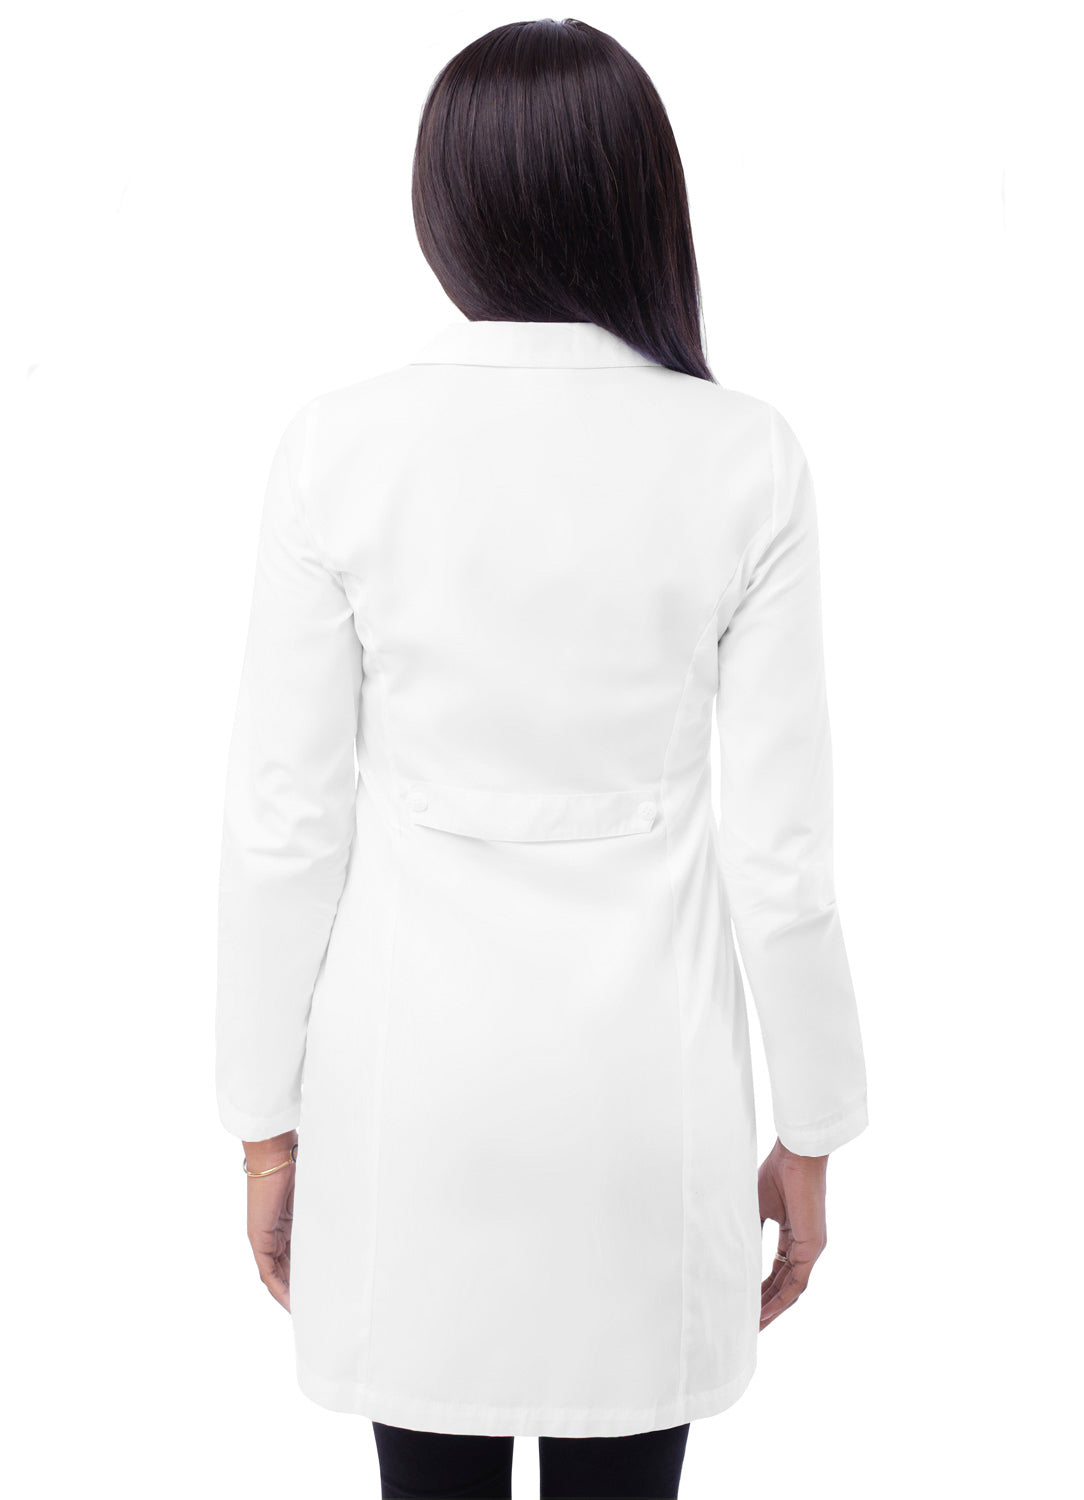 Adar Universal Women's 36" Slim-Fit Lab Coat